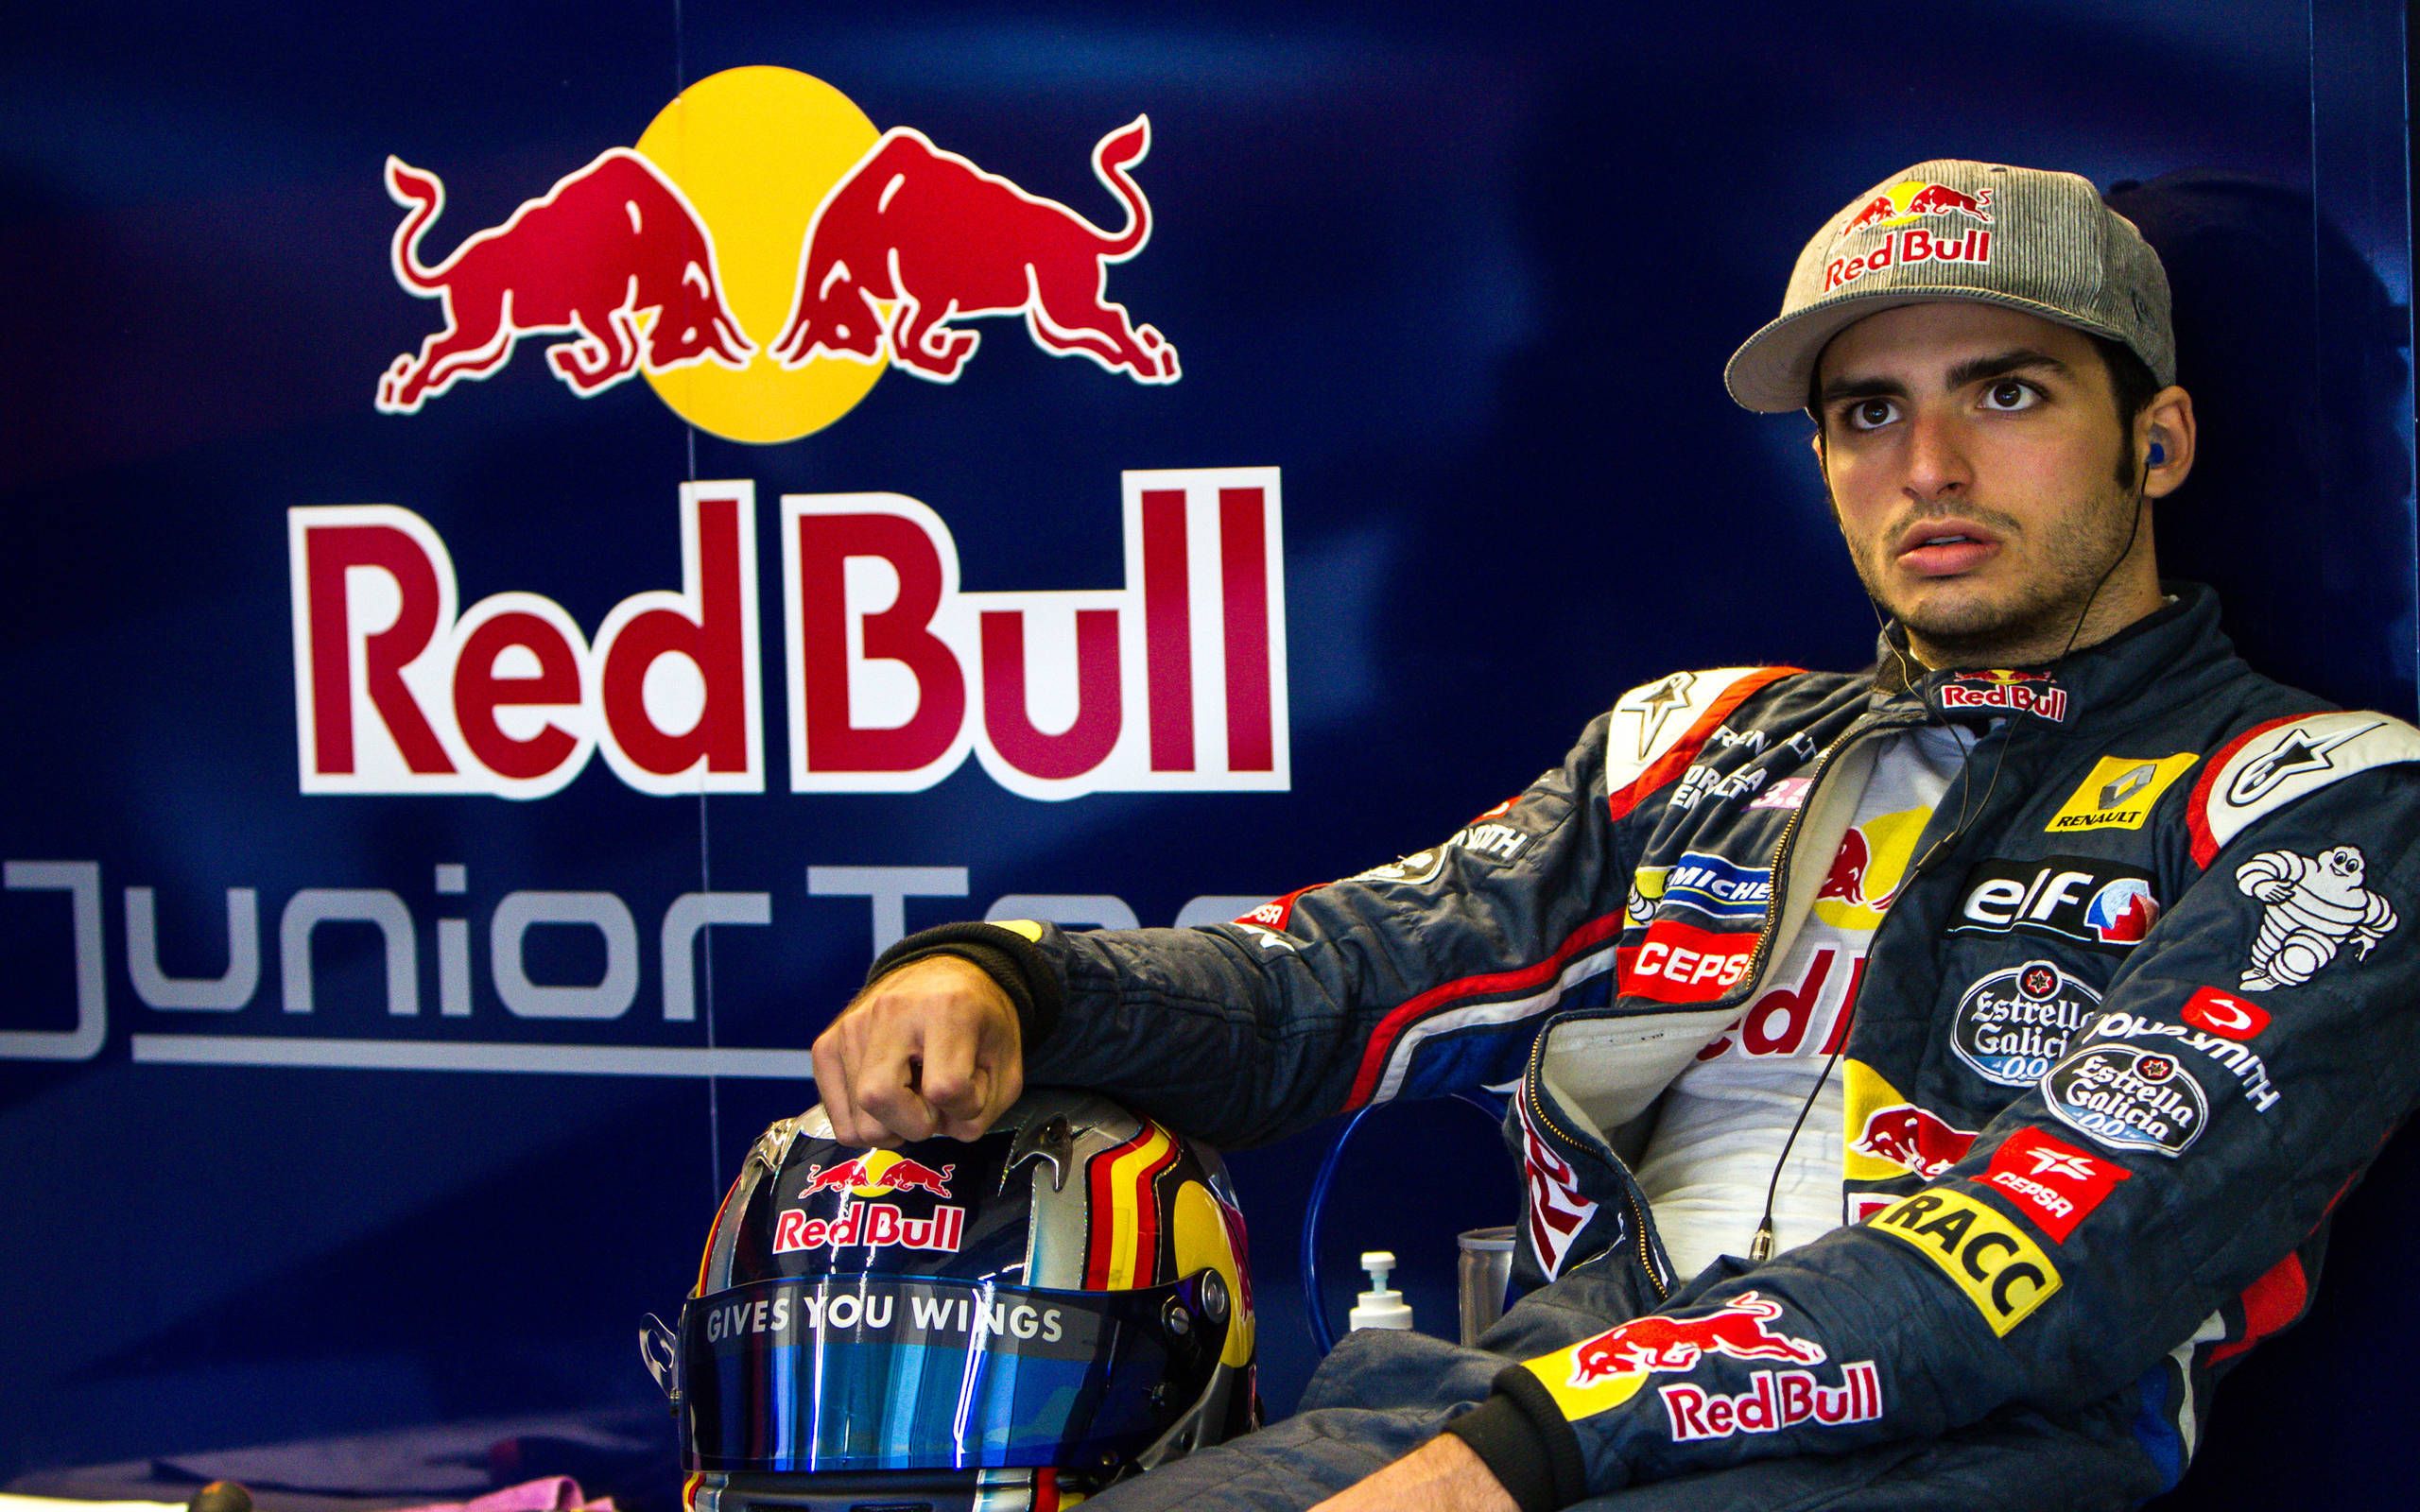 Allergi stemning Soar Carlos Sainz Jr. confirmed for Toro Rosso Formula One seat in 2015